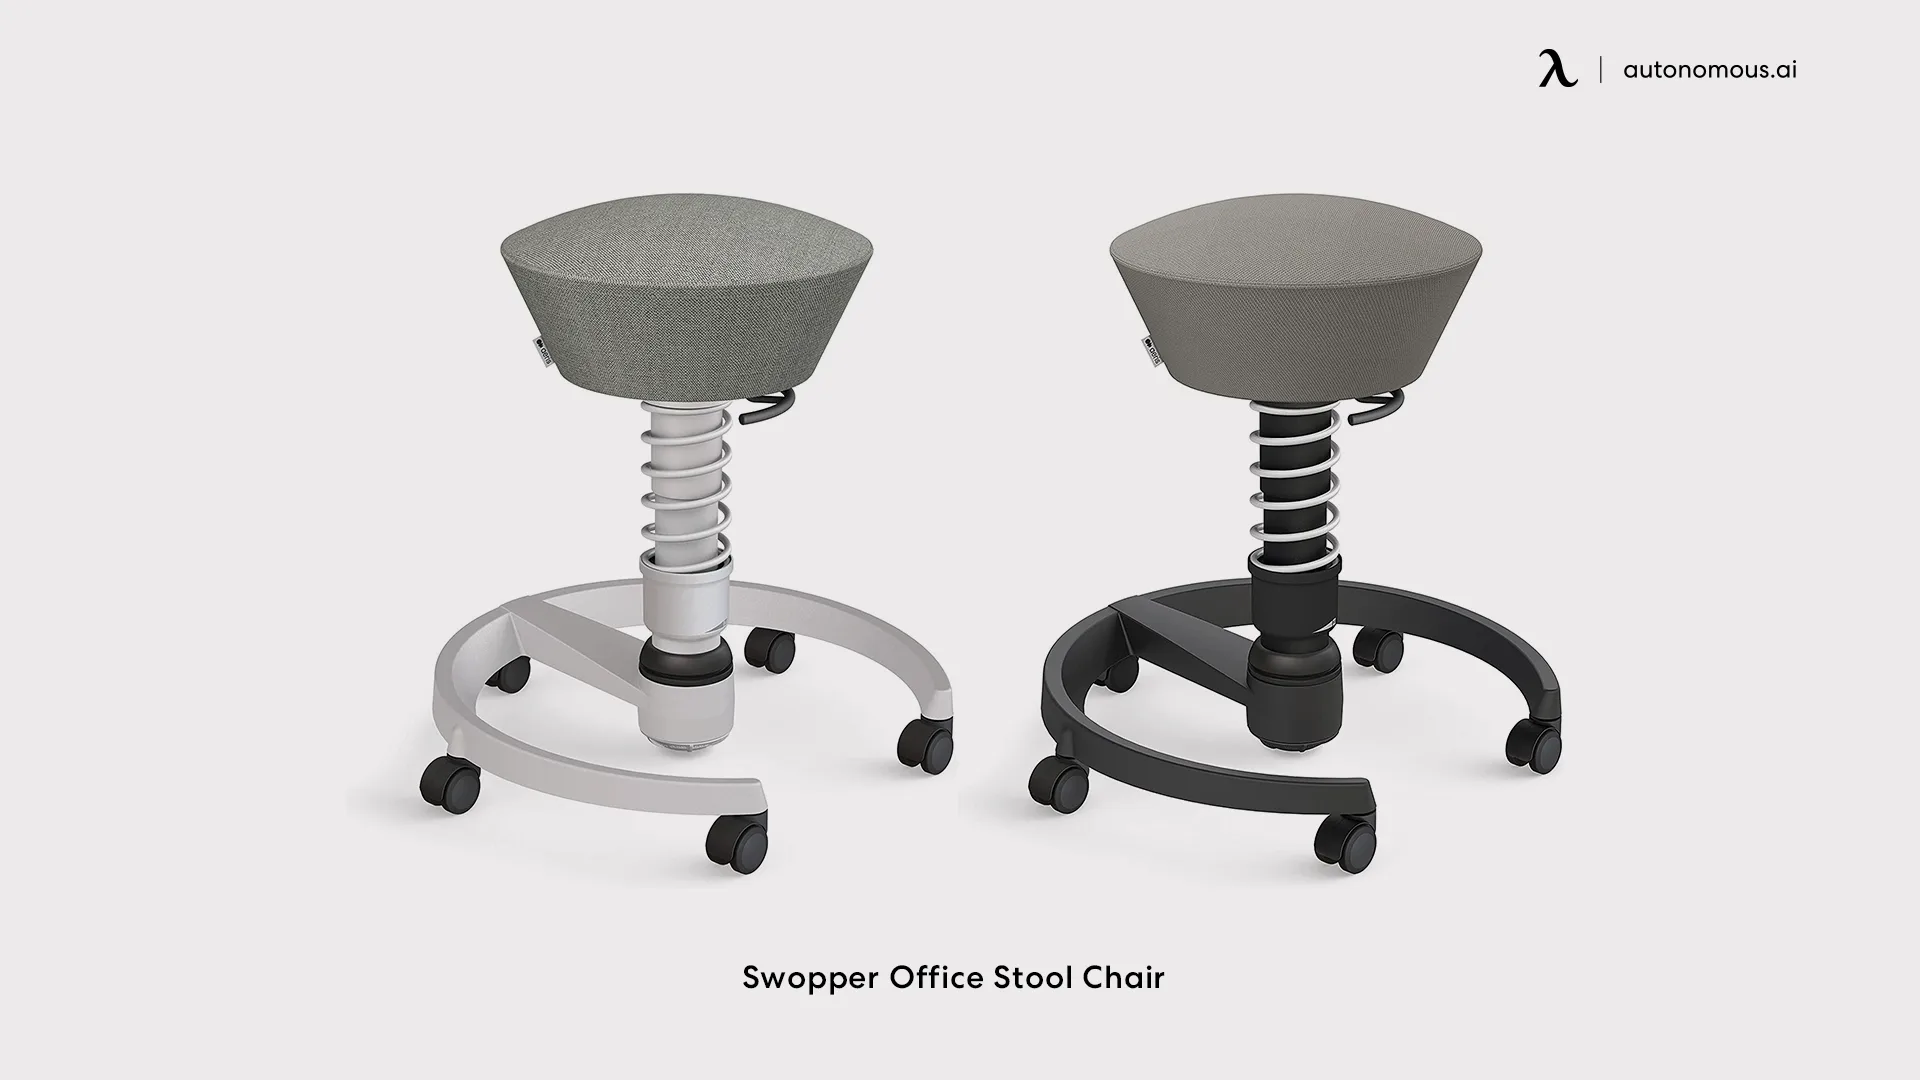 Swopper Office Stool Chair